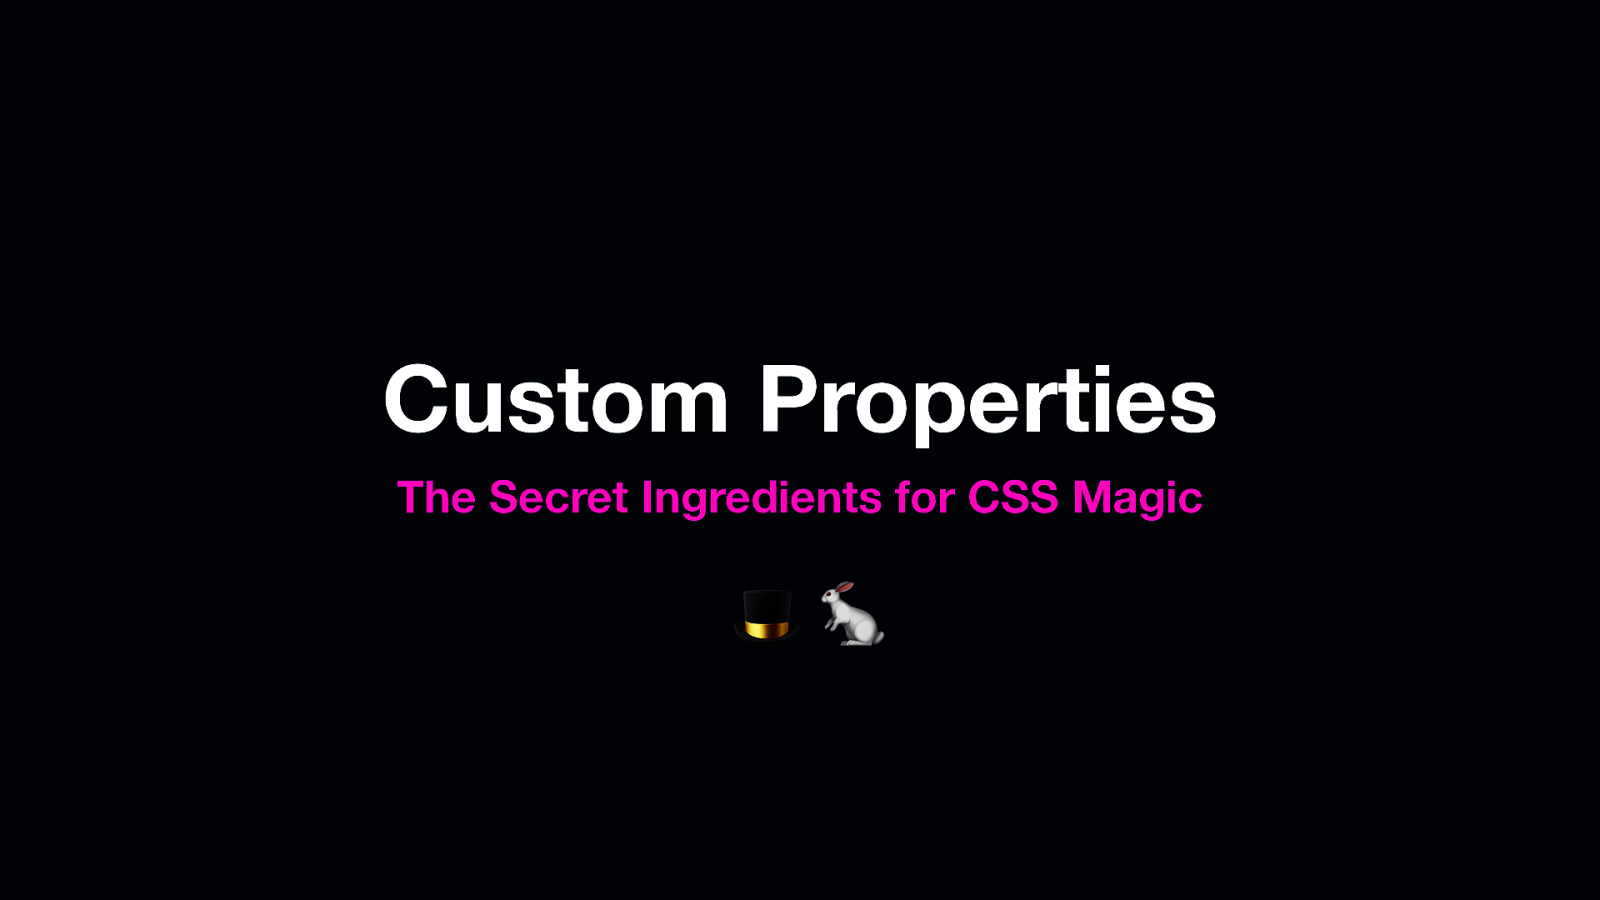 Custom Properties: The Secret Ingredients for CSS Magic